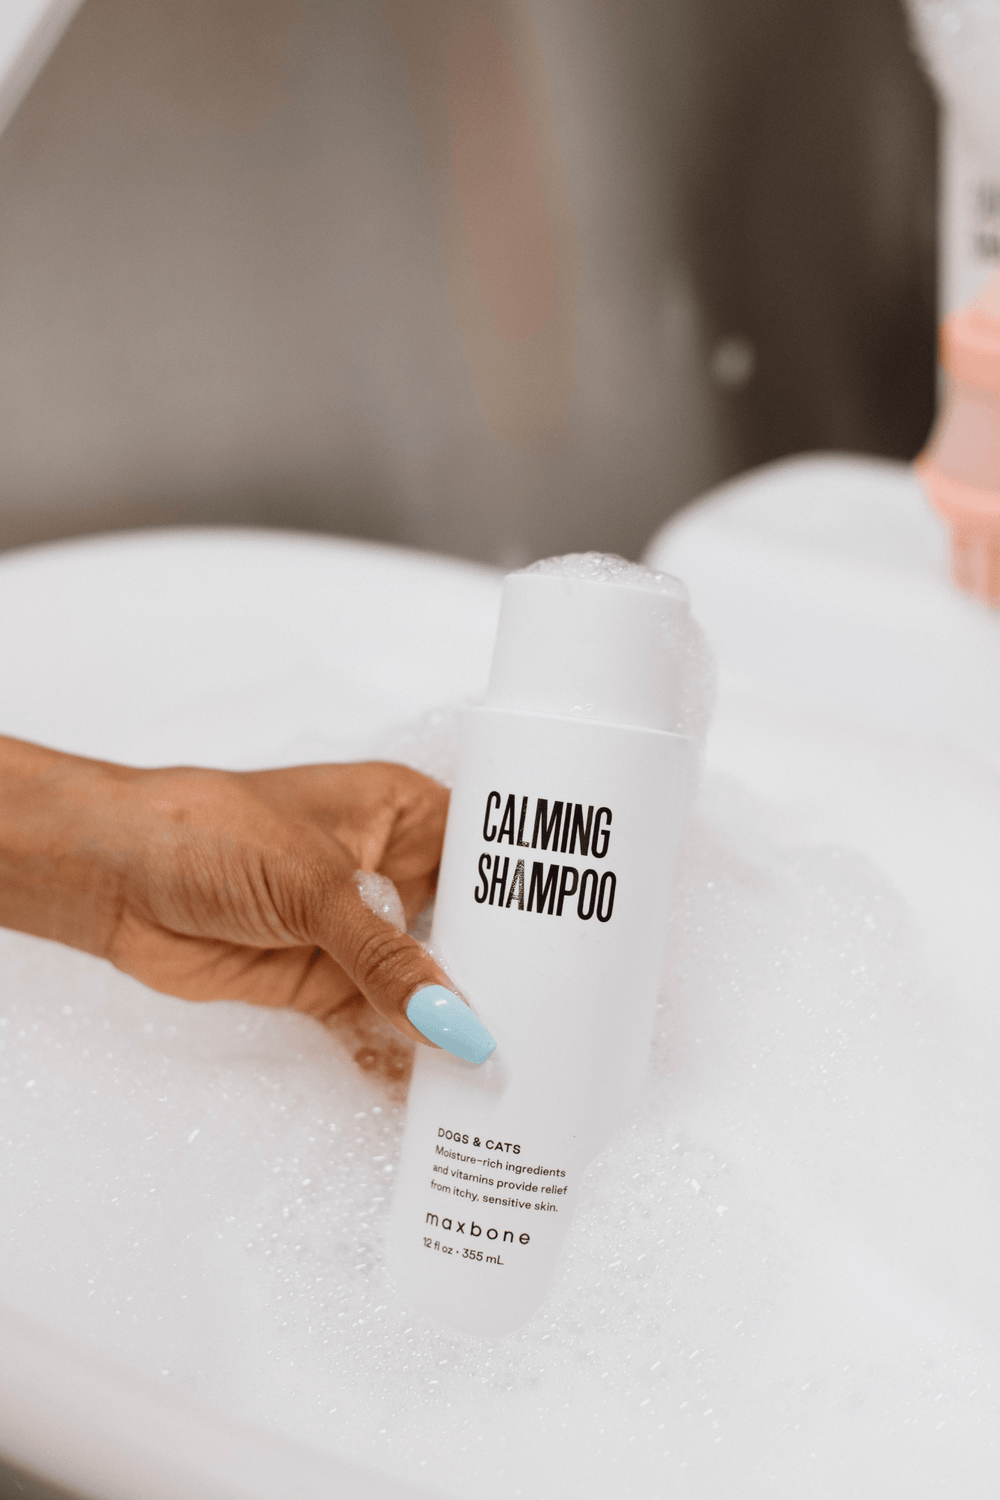 Calming Shampoo - maxbone